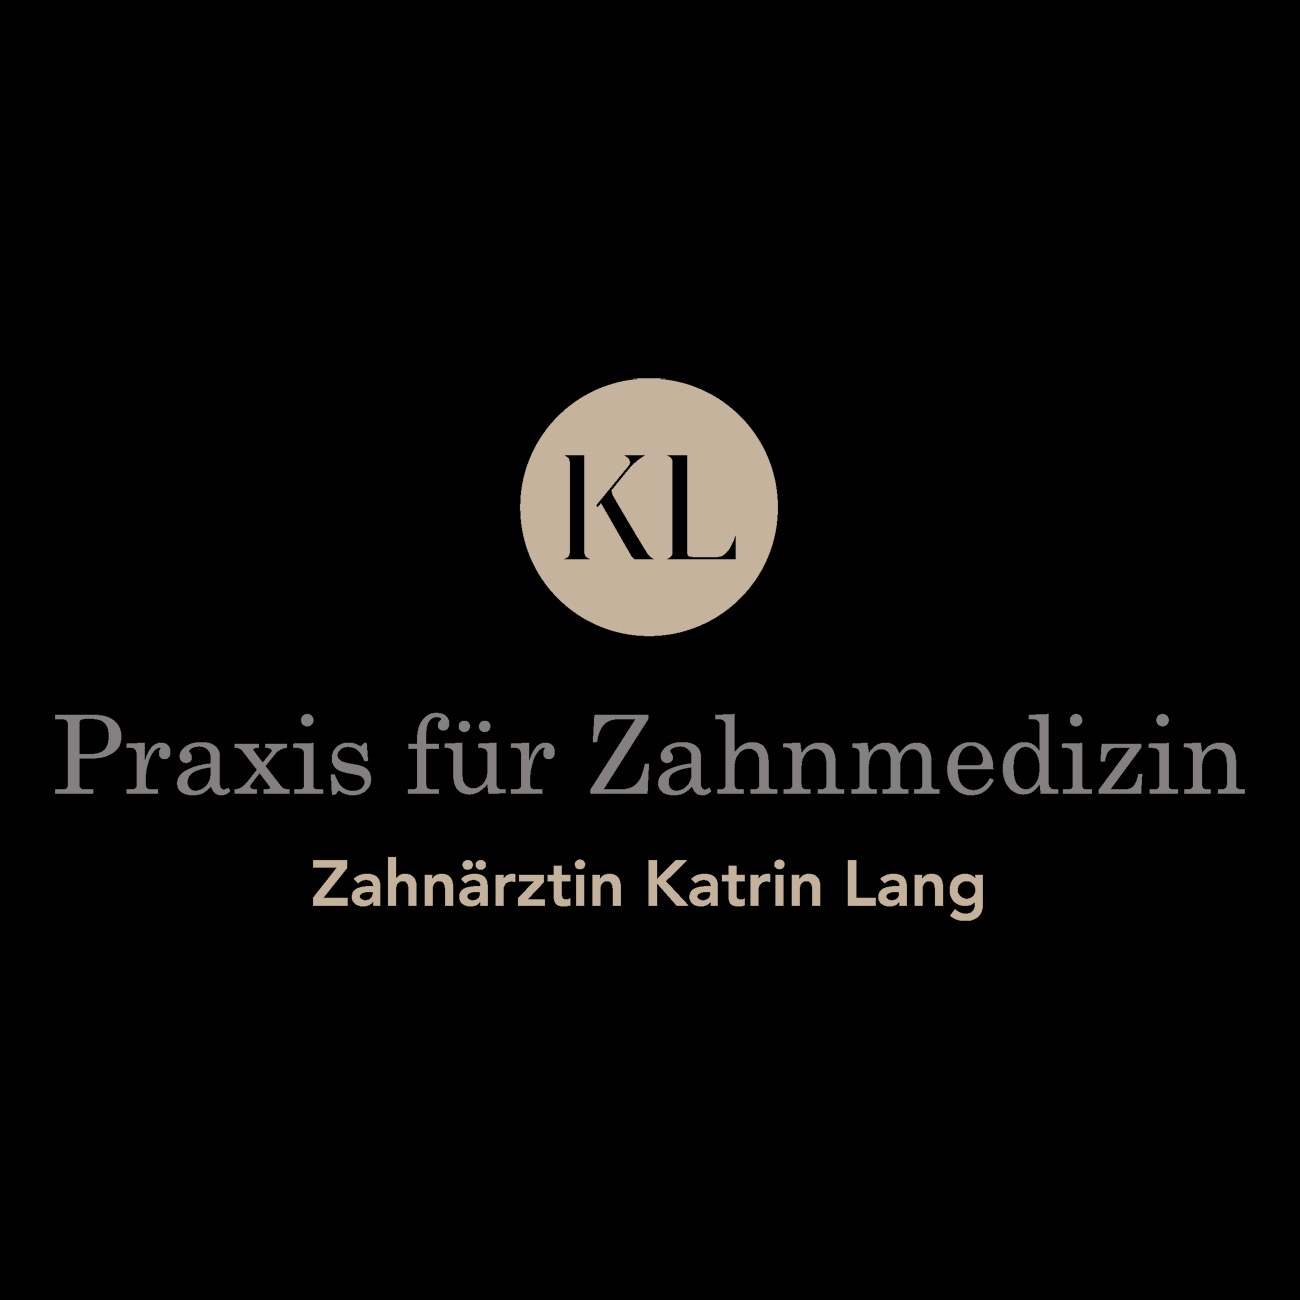 Zahnarztpraxis Katrin Lang in Regensburg - Logo